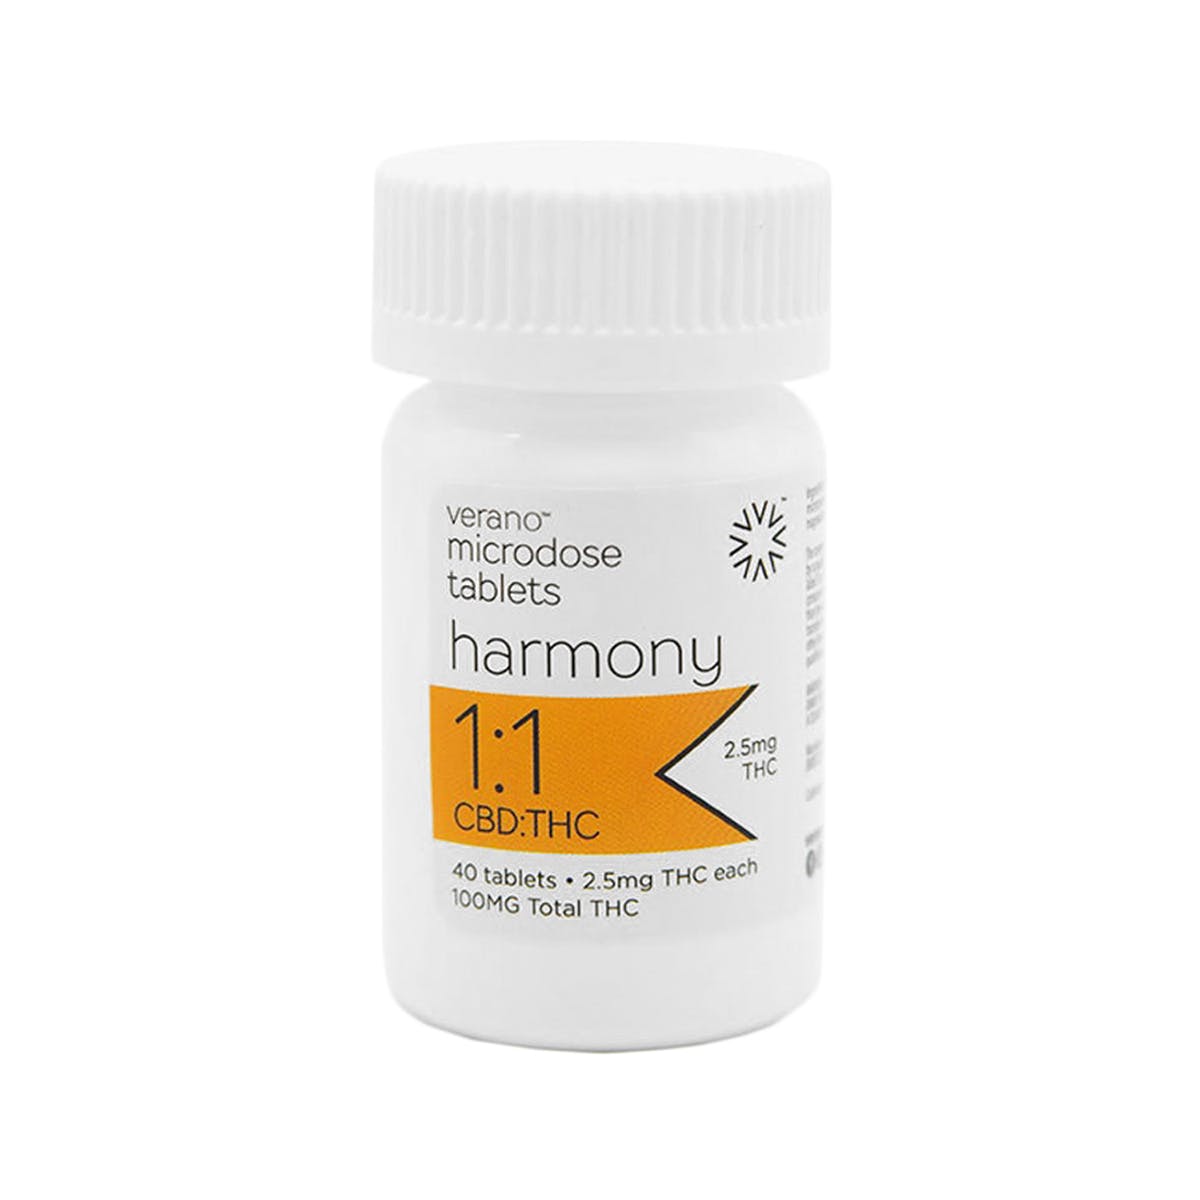 Microdose Tablets - Harmony 1:1 CBD/THC